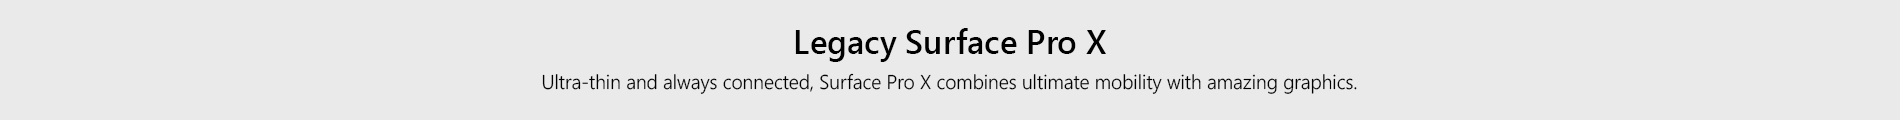 Microsoft Surface Header Landing Page  Tile 03